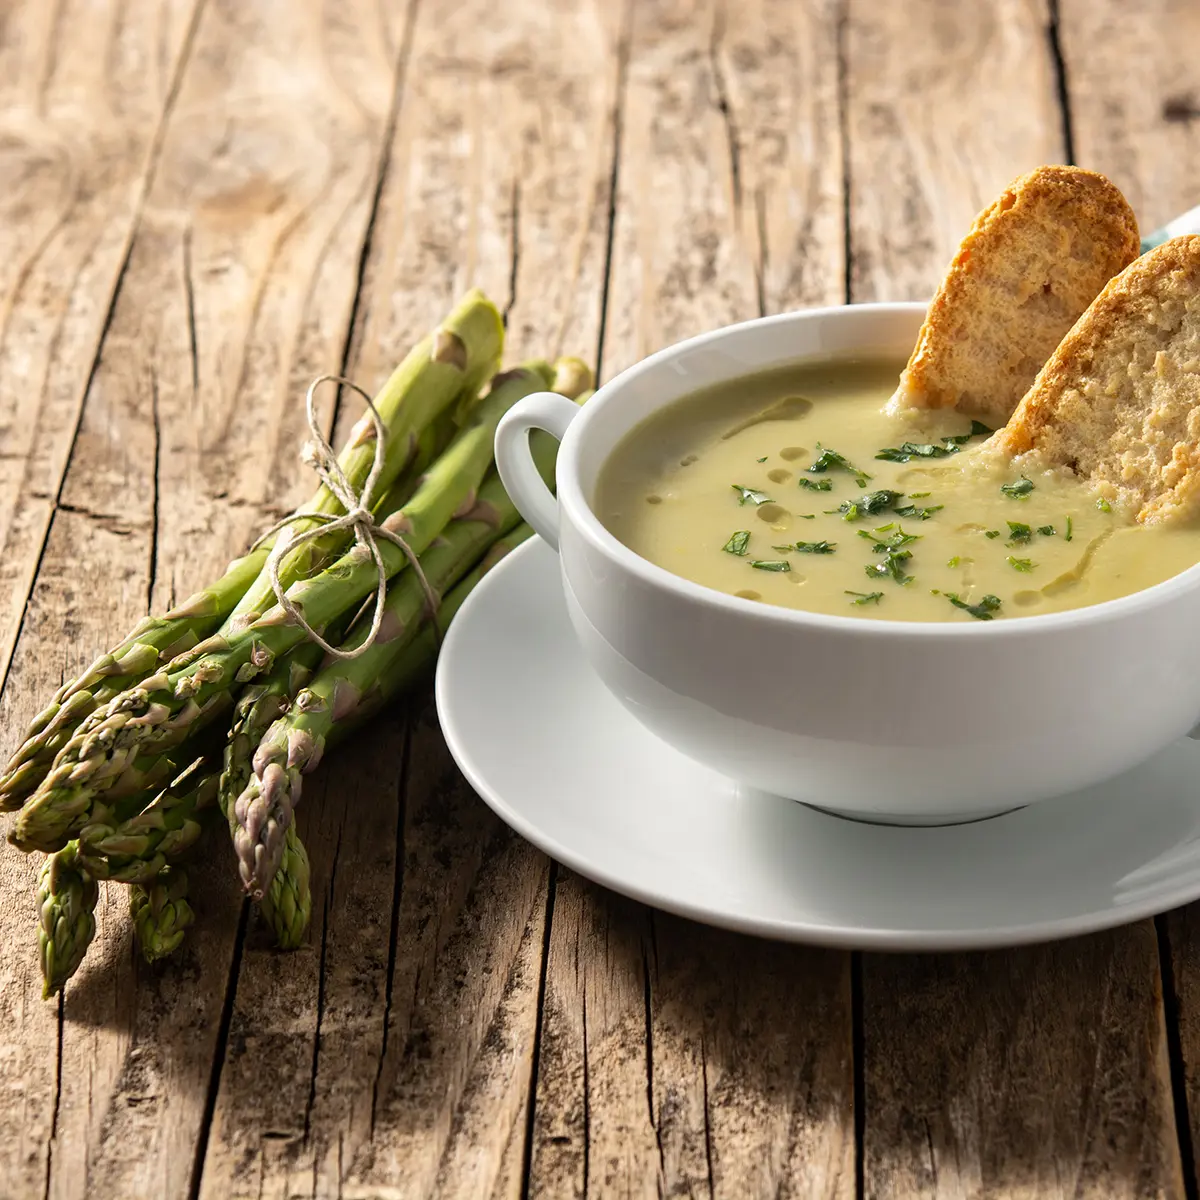 Asparagus creamy soup